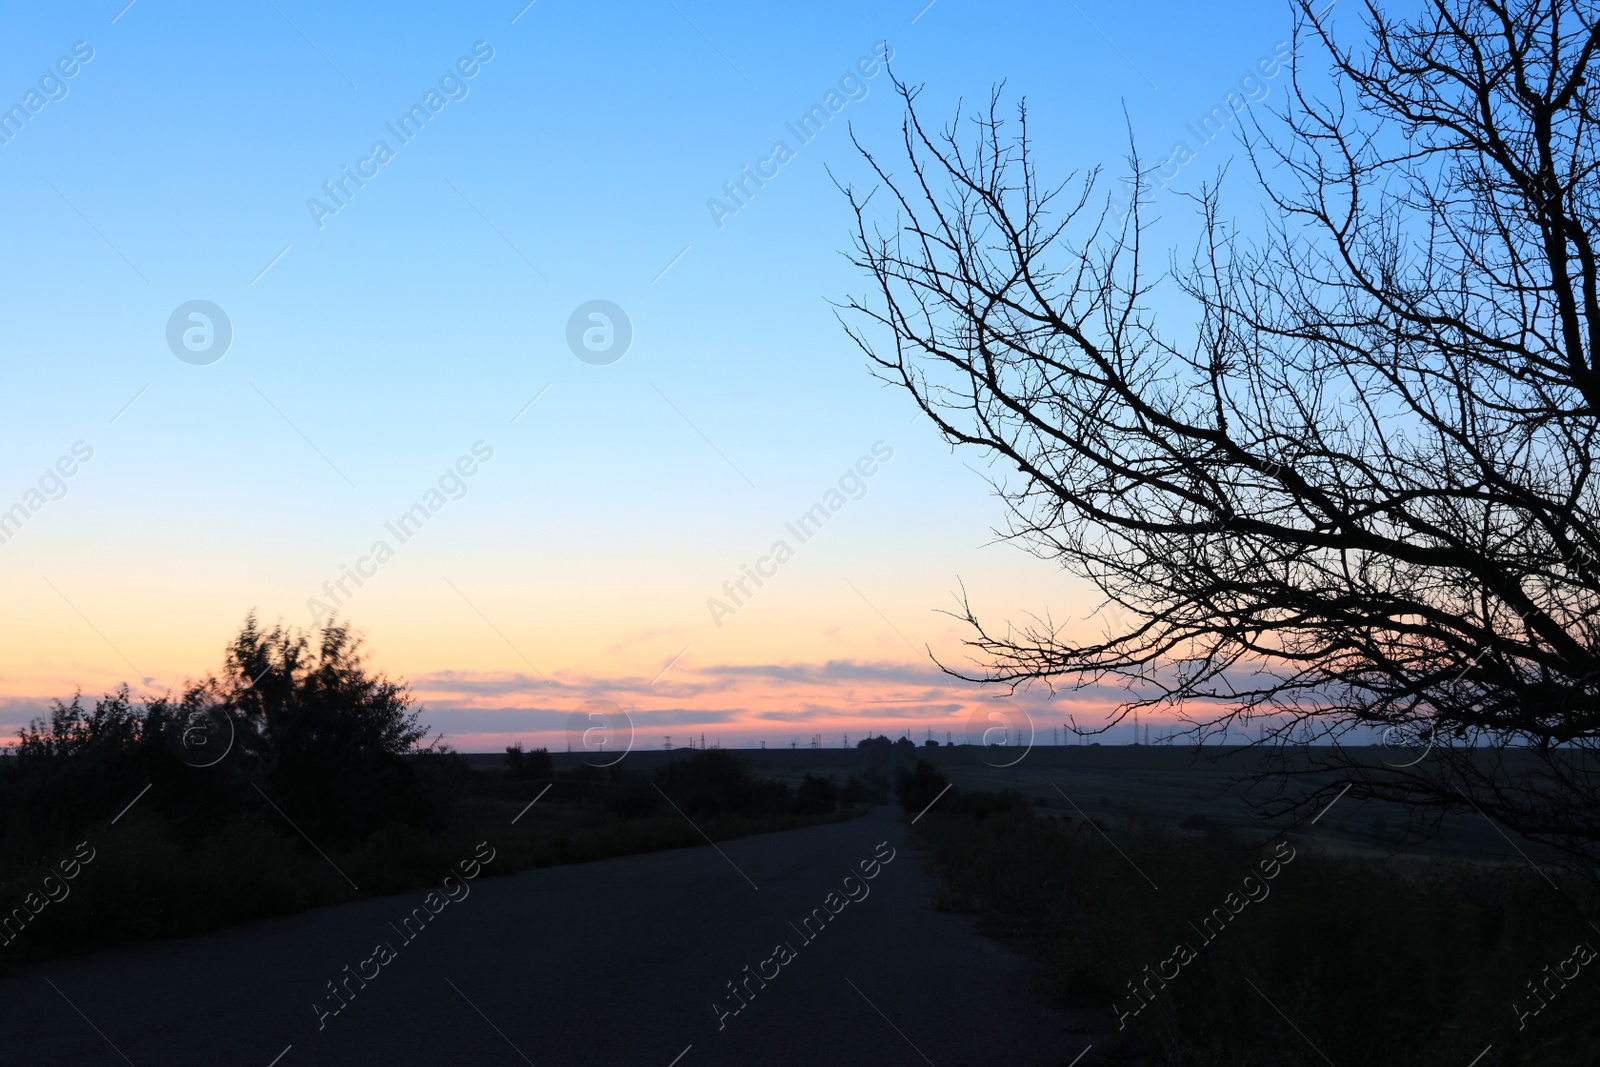 Photo of Picturesque landscape with asphalt road at sunrise